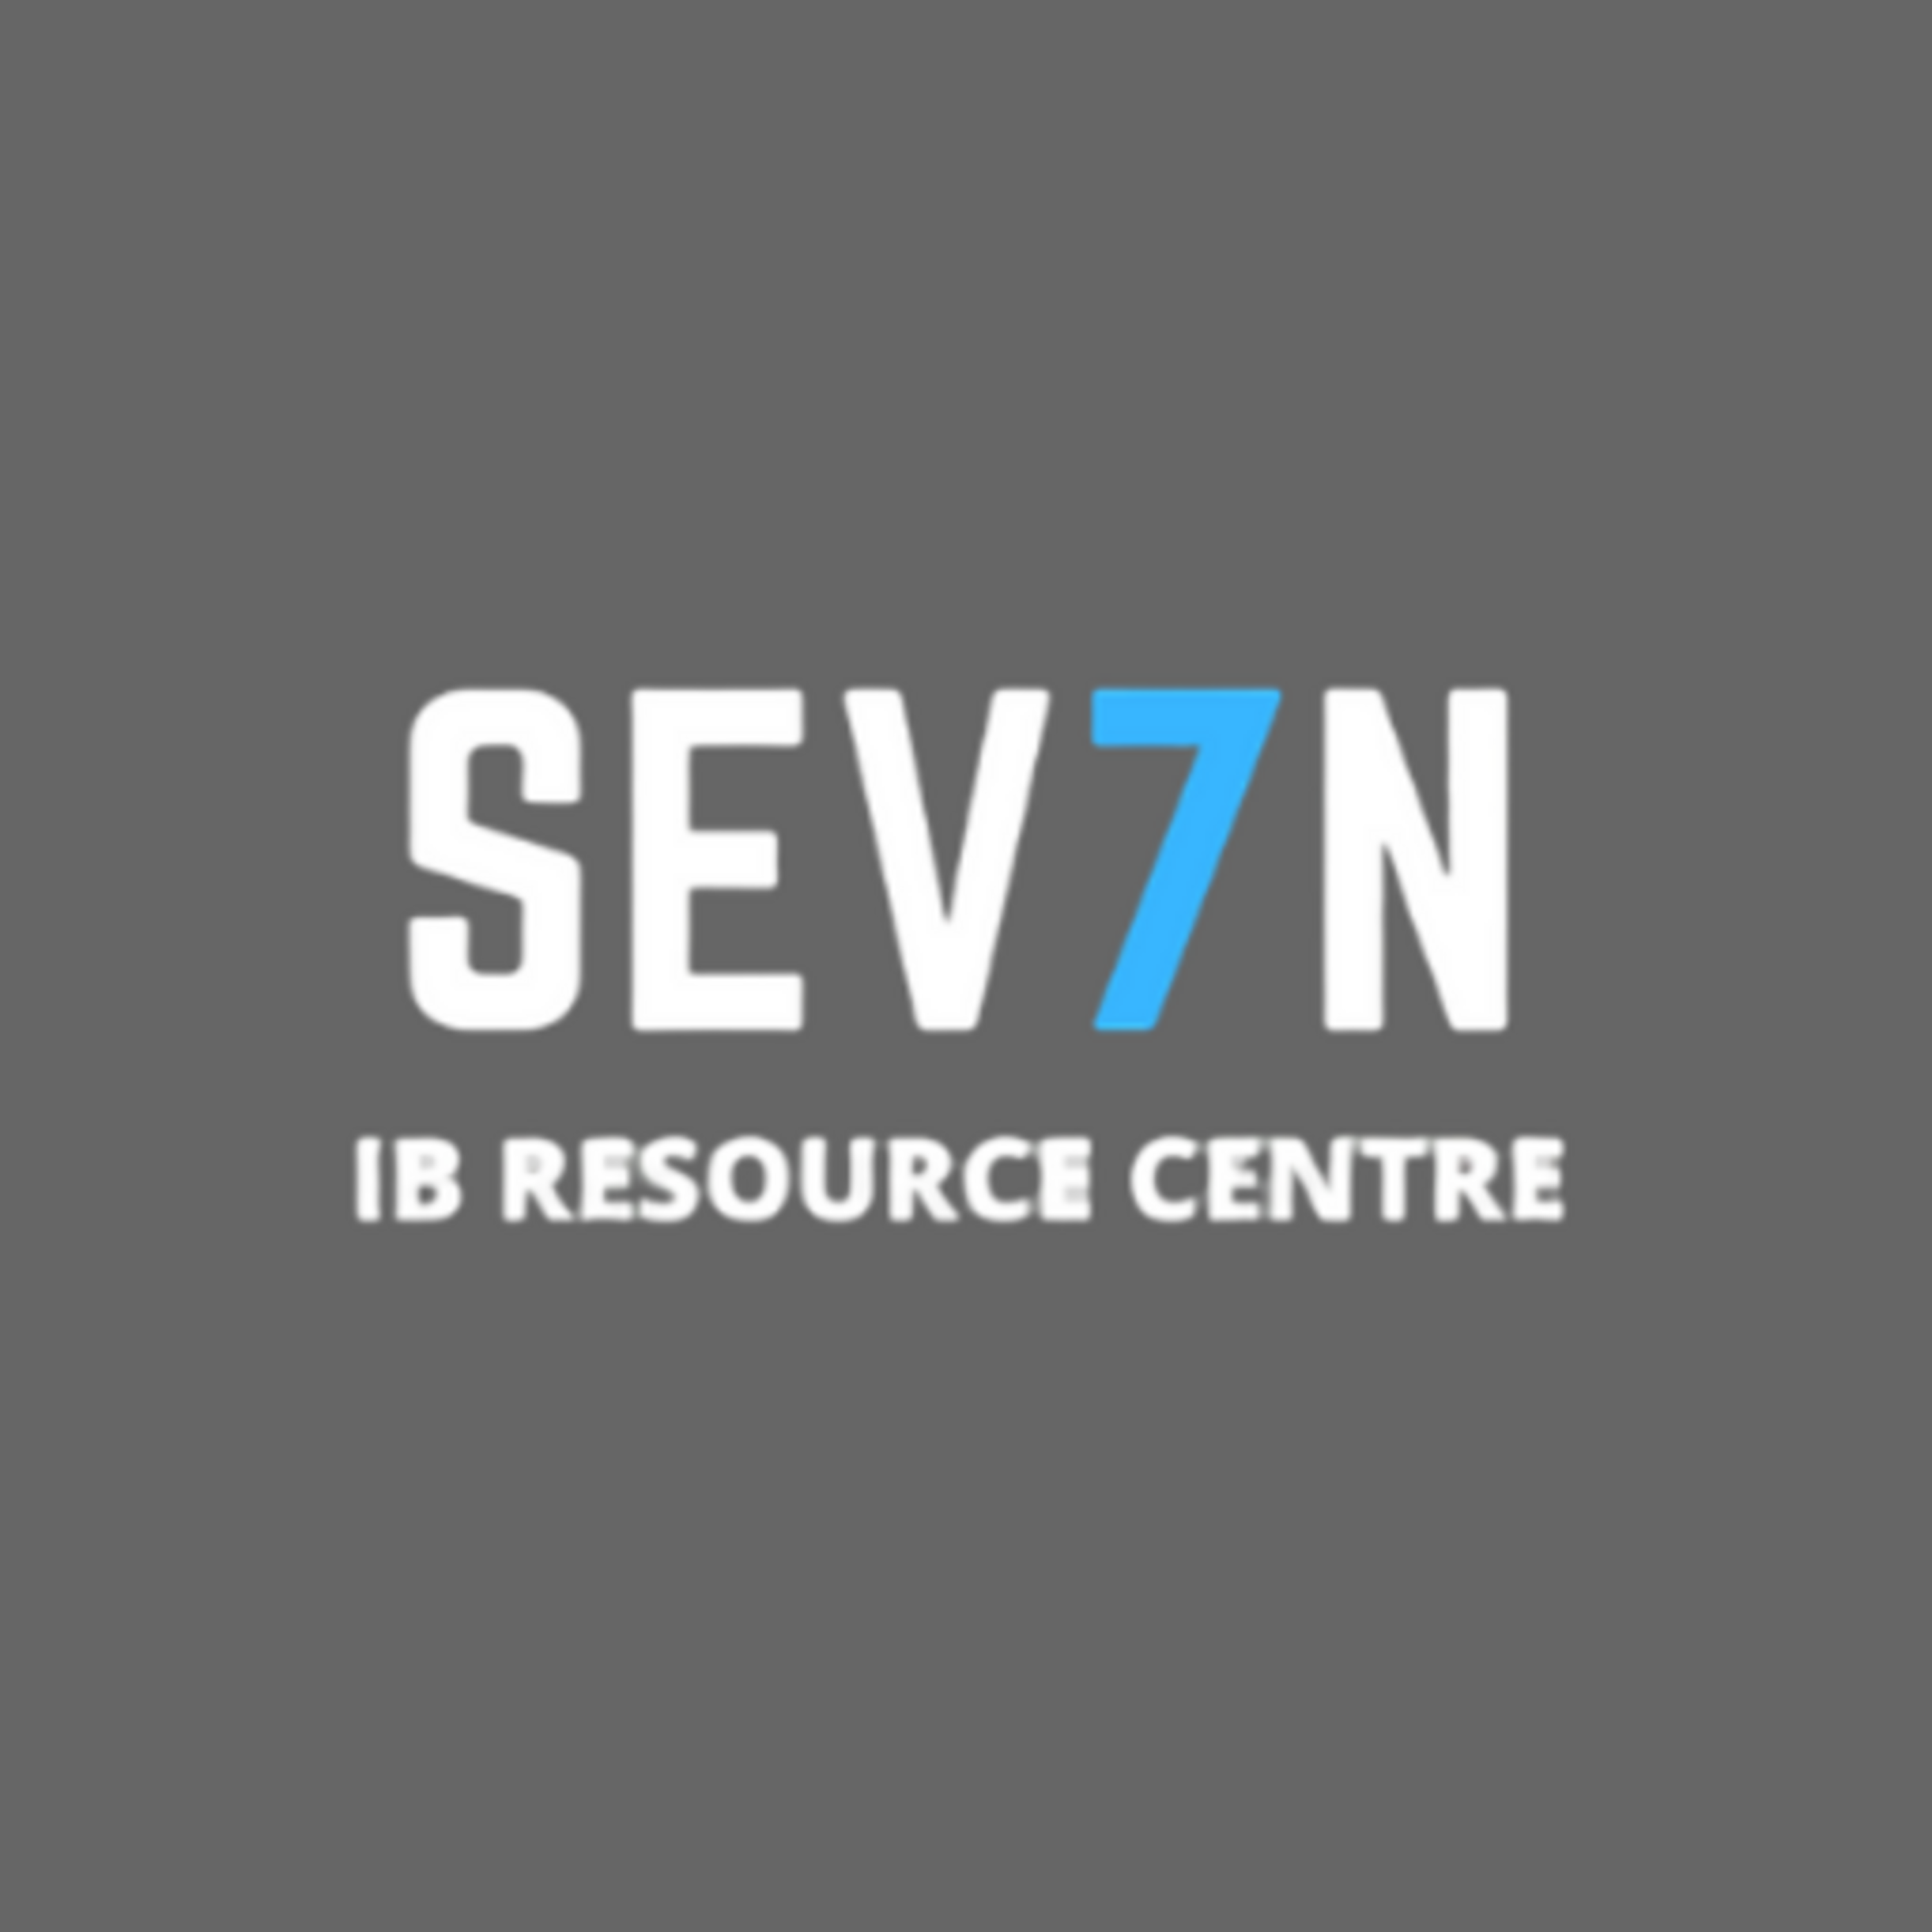 Sev7n IB Resource center